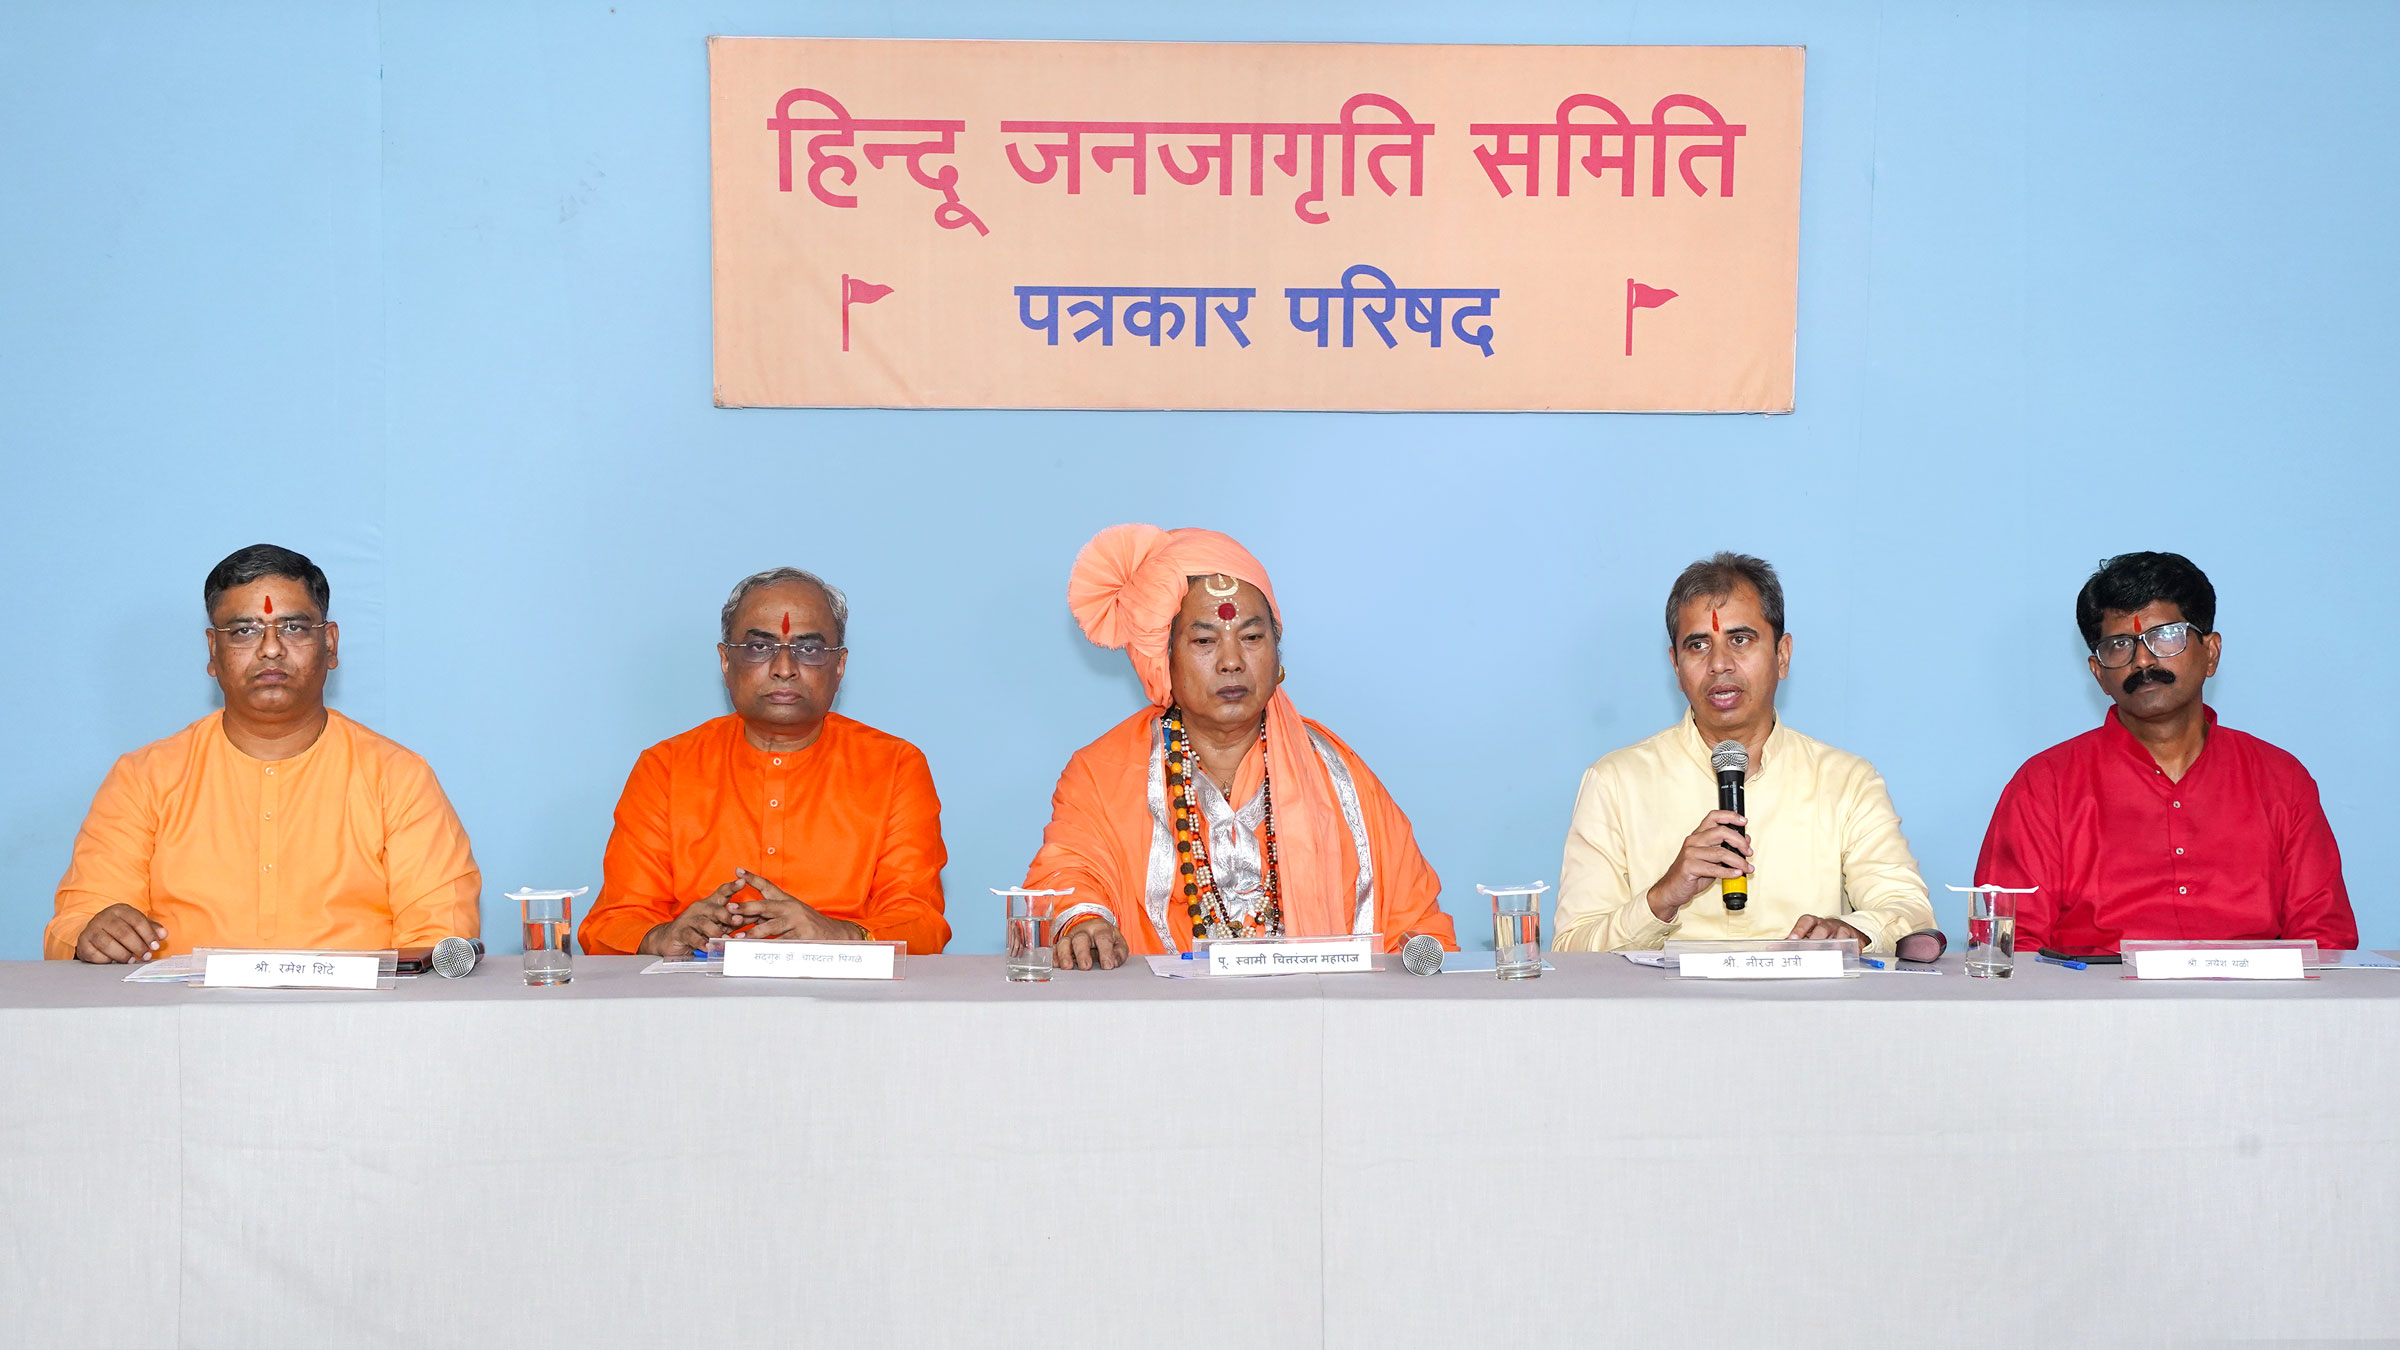 Addressing a Press Conference in Ponda, Goa - Mr Neeraj Atri (President, Vivekananda Karya Samiti, Panchkula, Haryana), others (From left) Mr Ramesh Shinde (National Spokesperson, Hindu Janajagruti Samiti), Sadguru (Dr) Charudatta Pingale (National Guide, Hindu Janajagruti Samiti), H.H. Swami Chittaranjan Maharaj (Shanti Kali Ashram, Amarpur, Tripura) and Mr Jayesh Thali (Secretary, Gomantak Mandir Mahasangh, Goa)